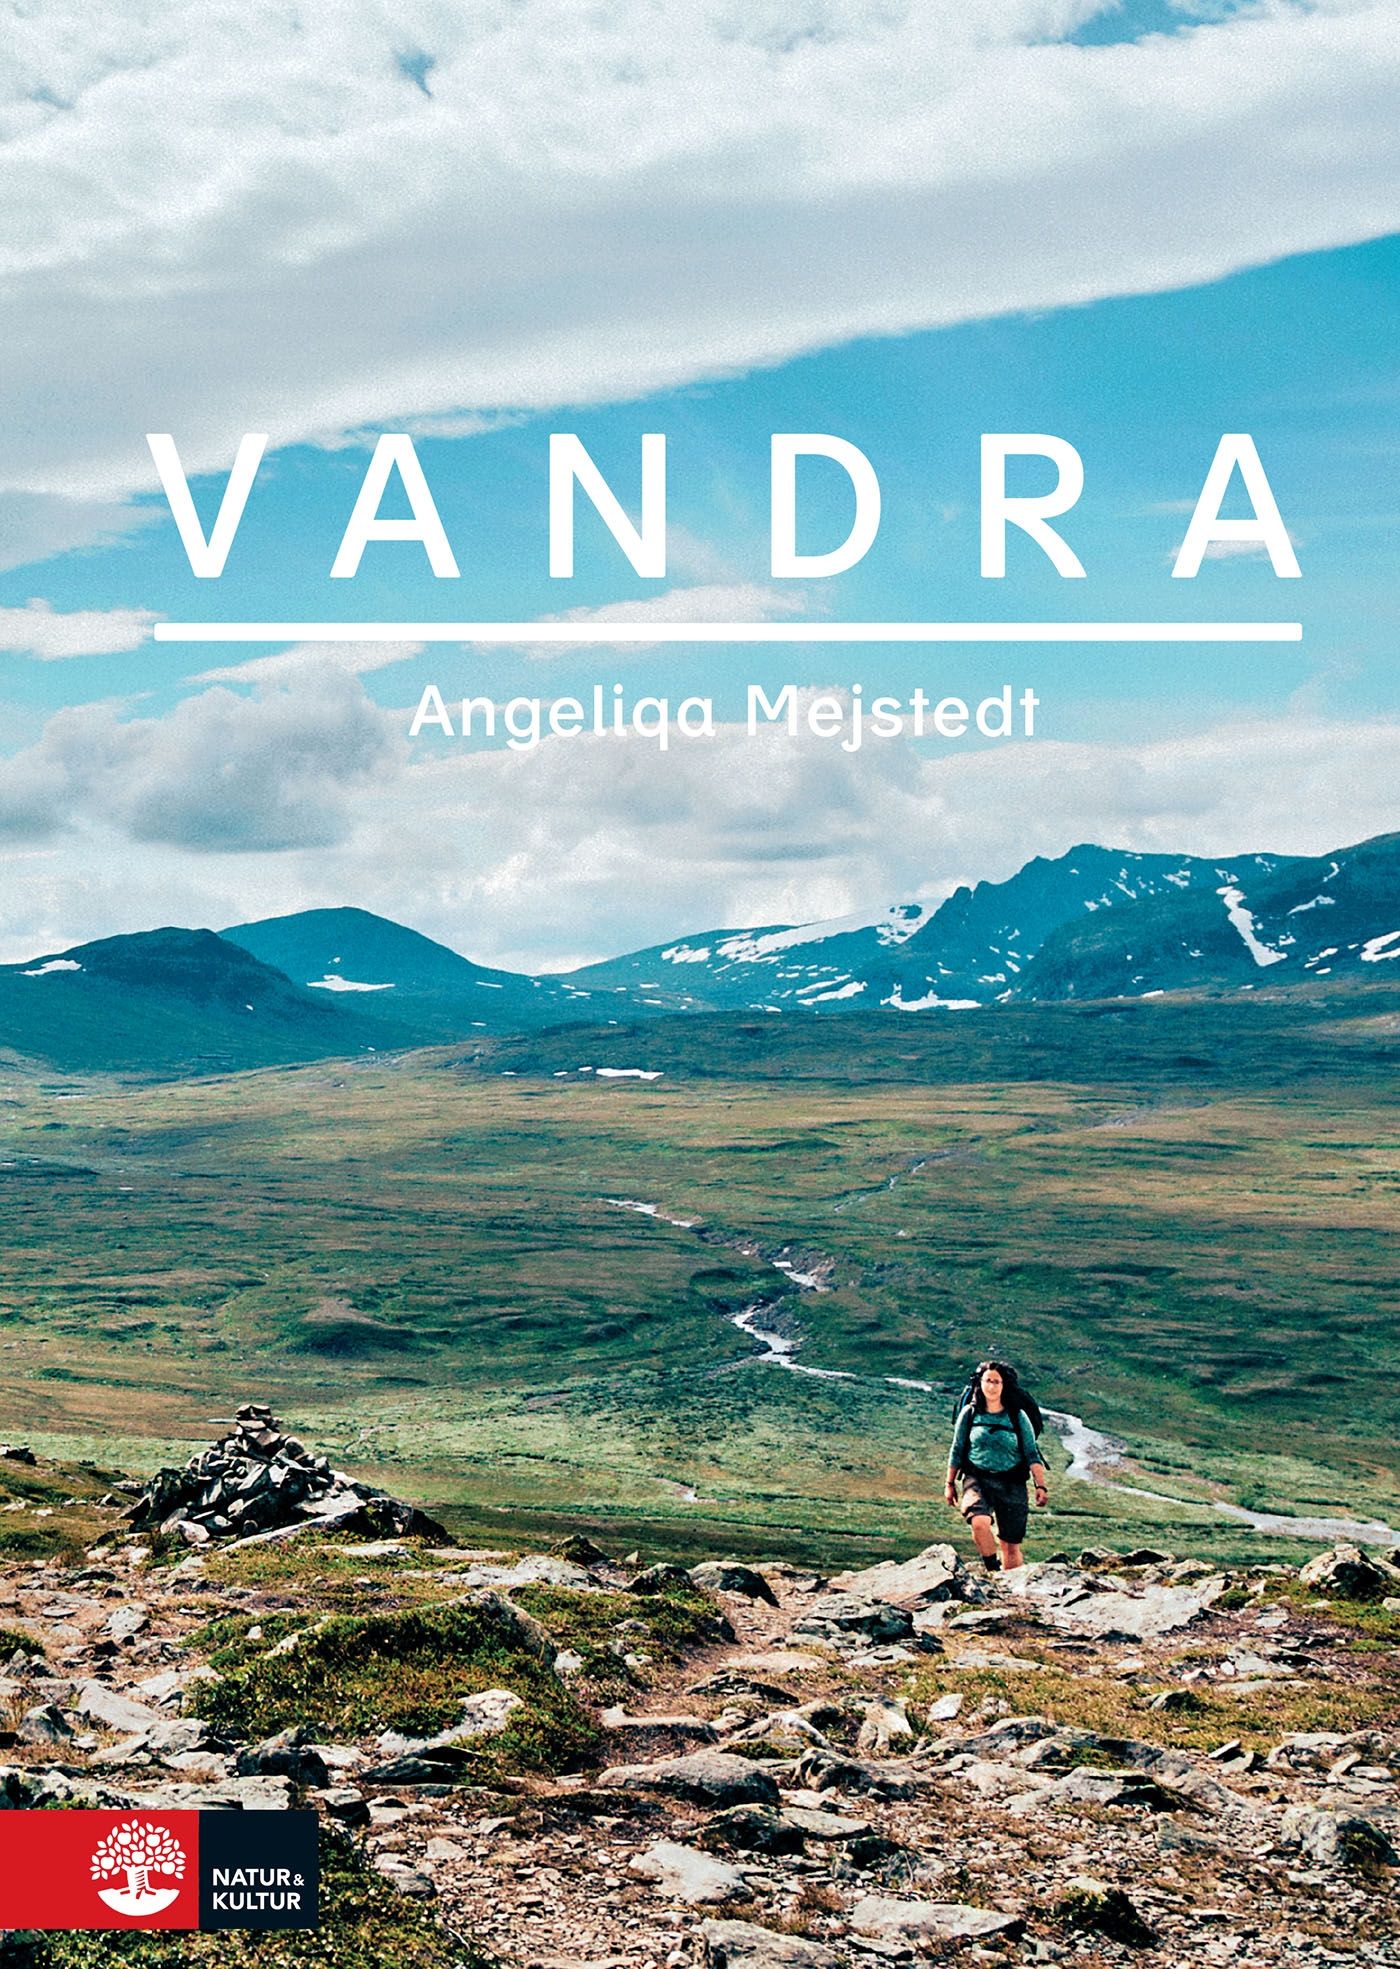 Vandra, eBook by Angeliqa Mejstedt